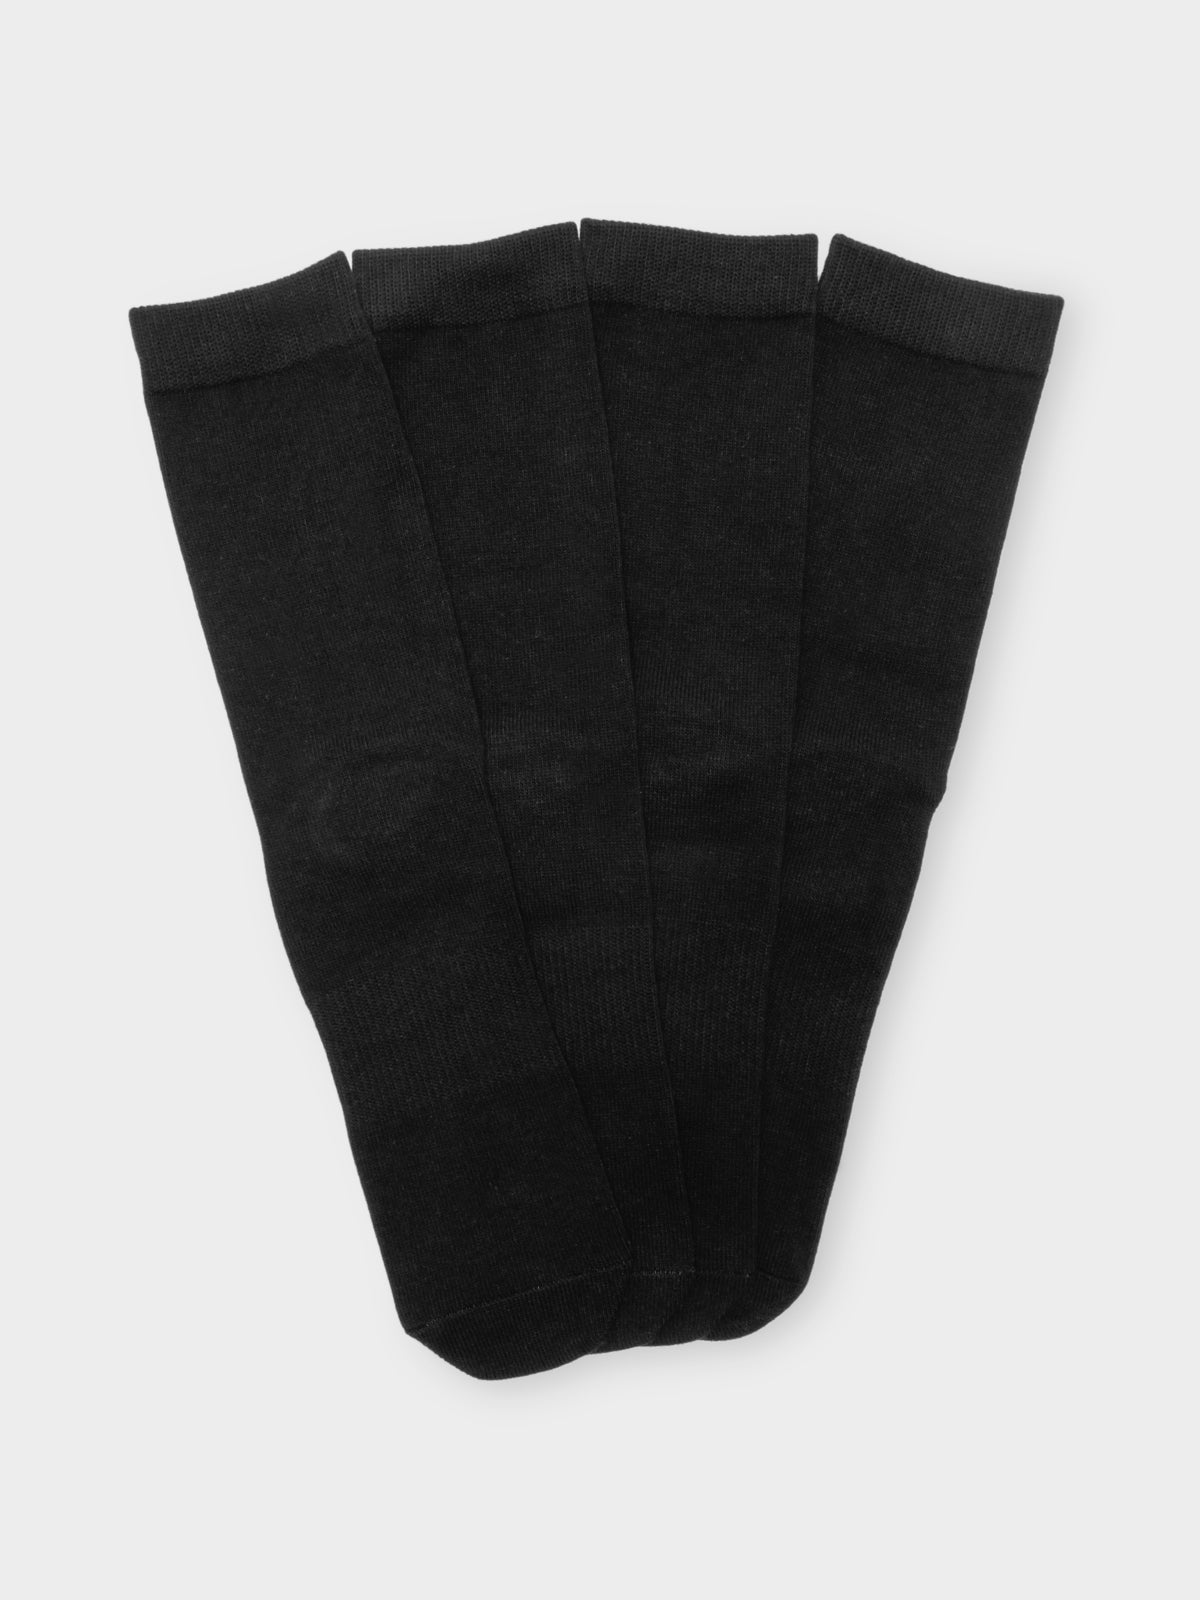 4 Pairs of Crew Socks in Black